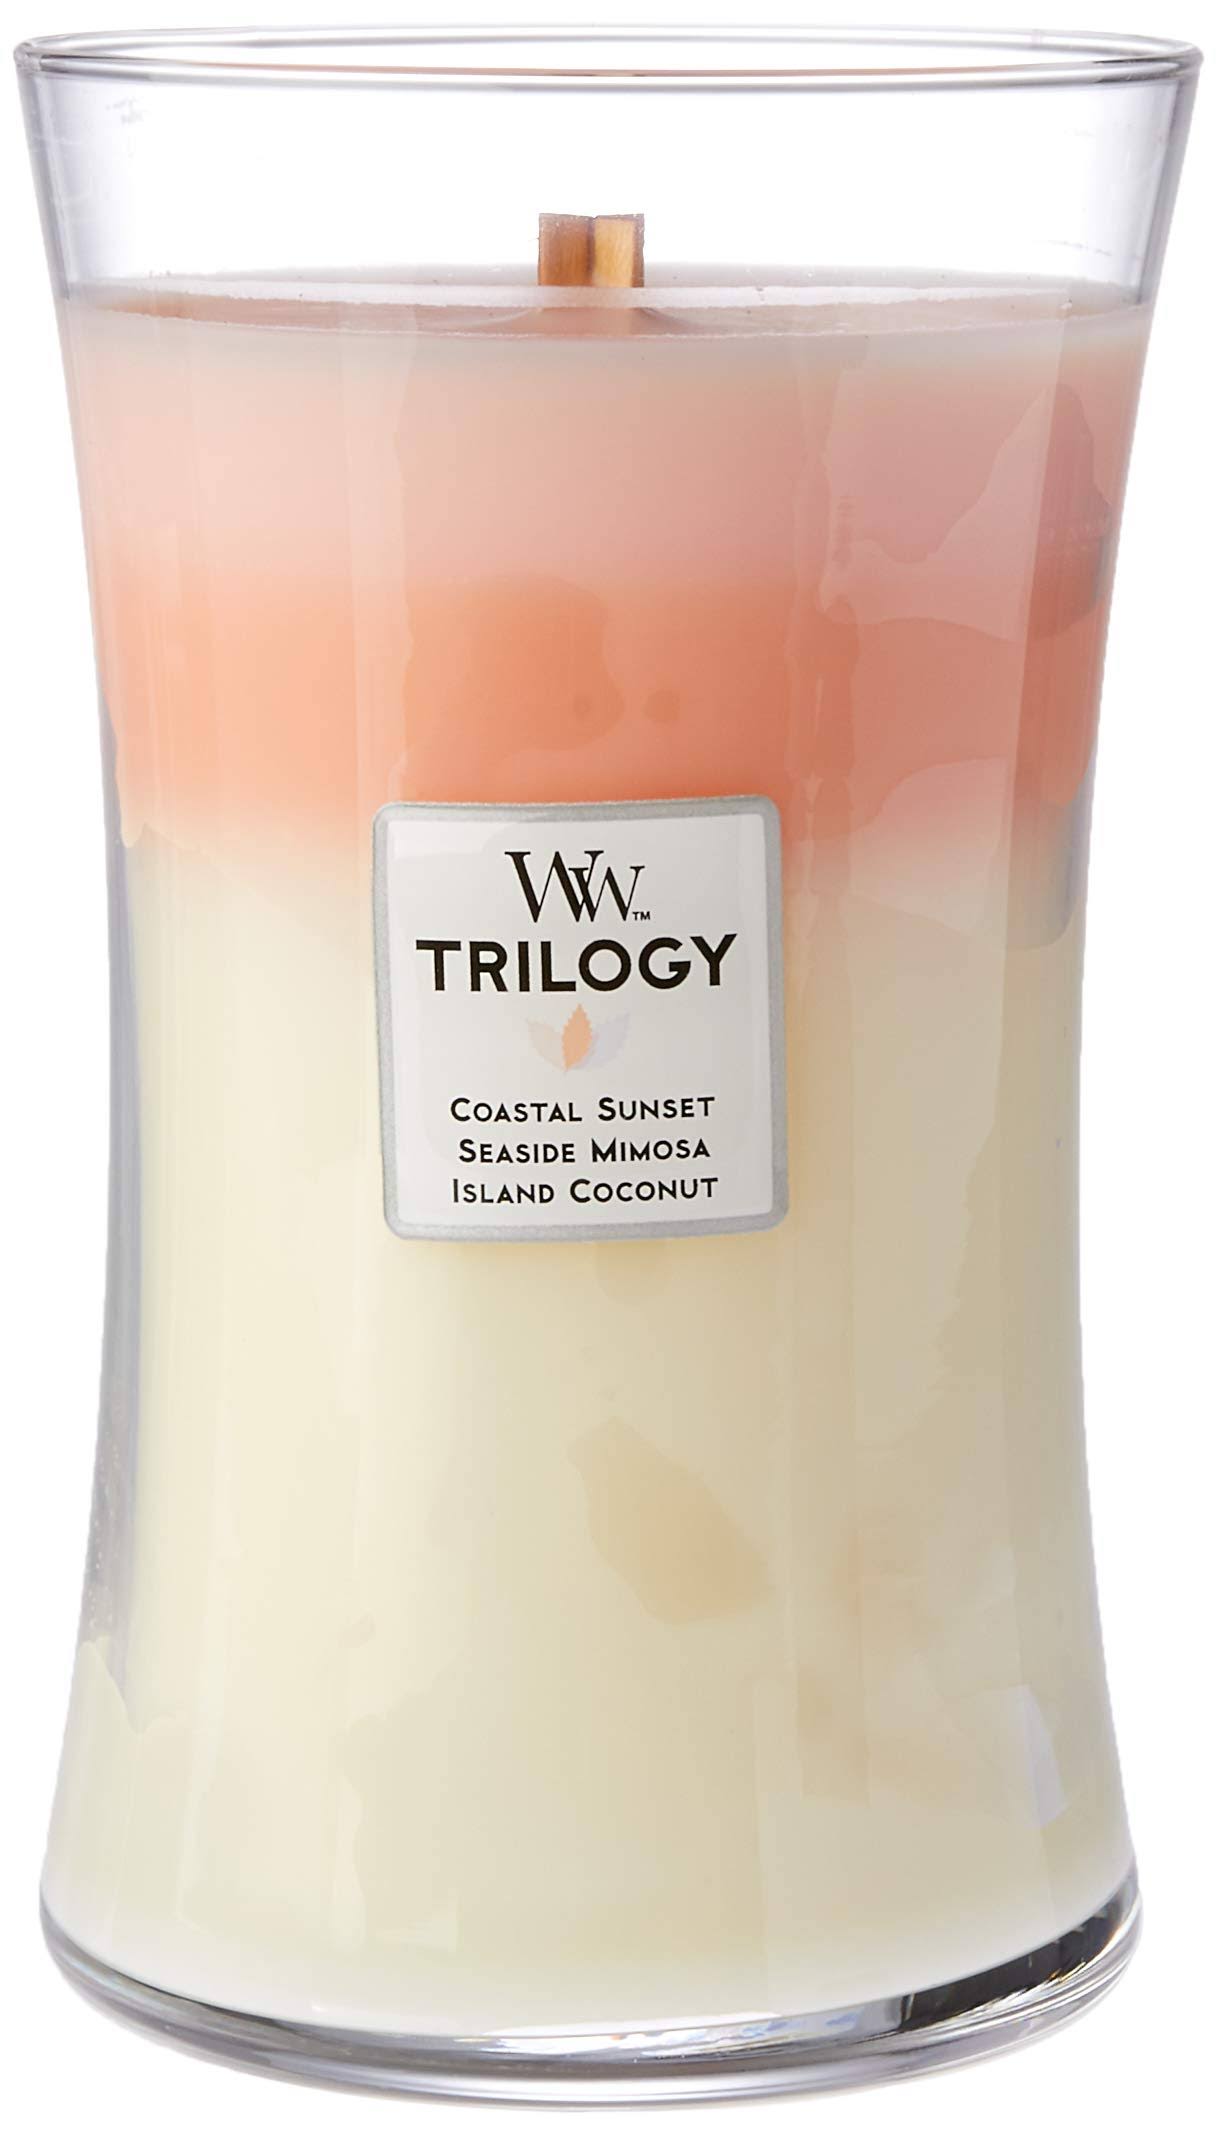 Ww Trilogy Candle, Coastal Sunset, Seaside Mimosa, Island Coconut, Island Getaway - 1 candle, 21.5 oz